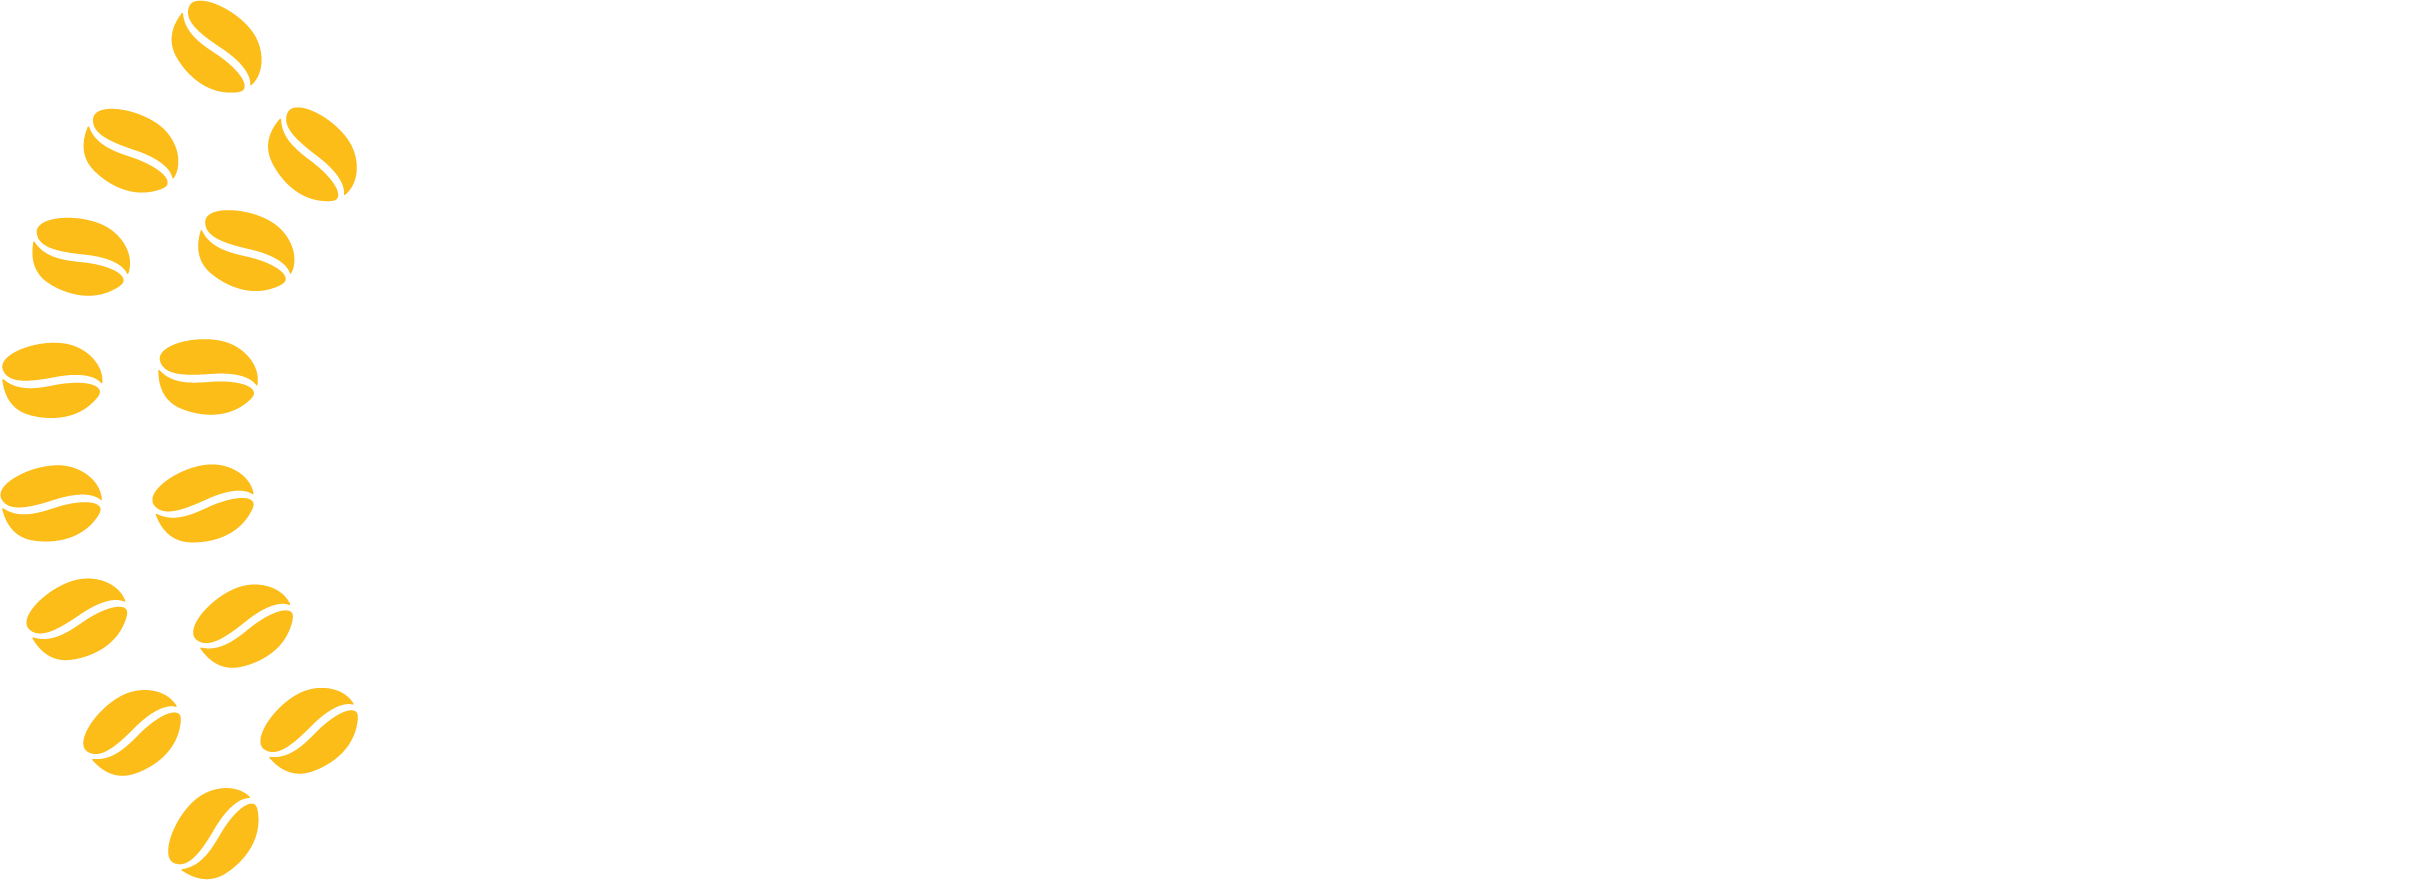 Kansas Methodist Foundation logo